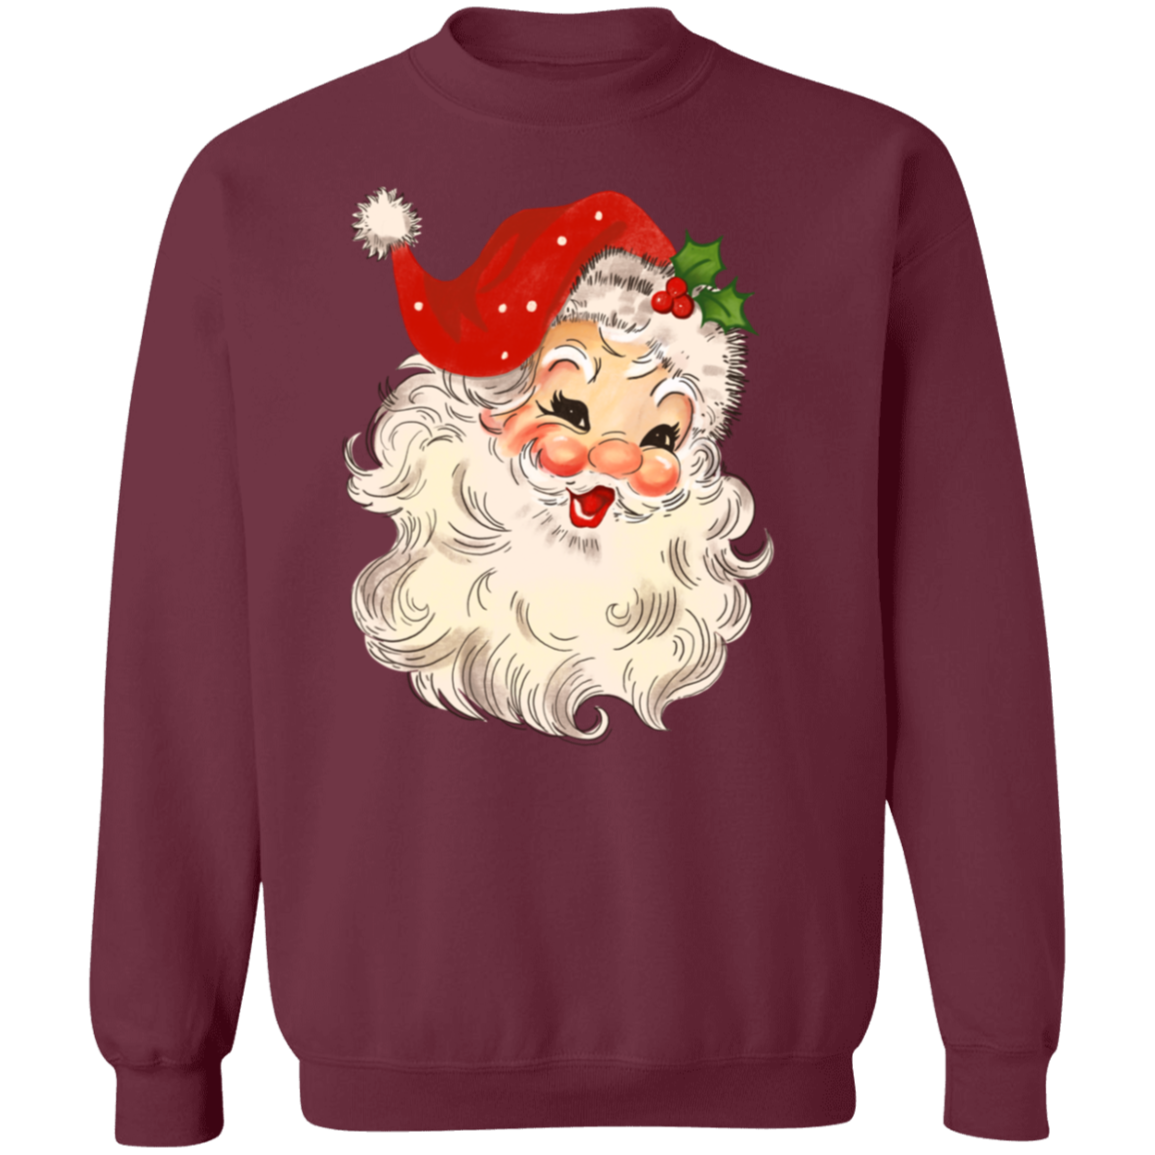 Santa, Merry Christmas - Unisex Ugly Sweatshirt, Christmas, Winter